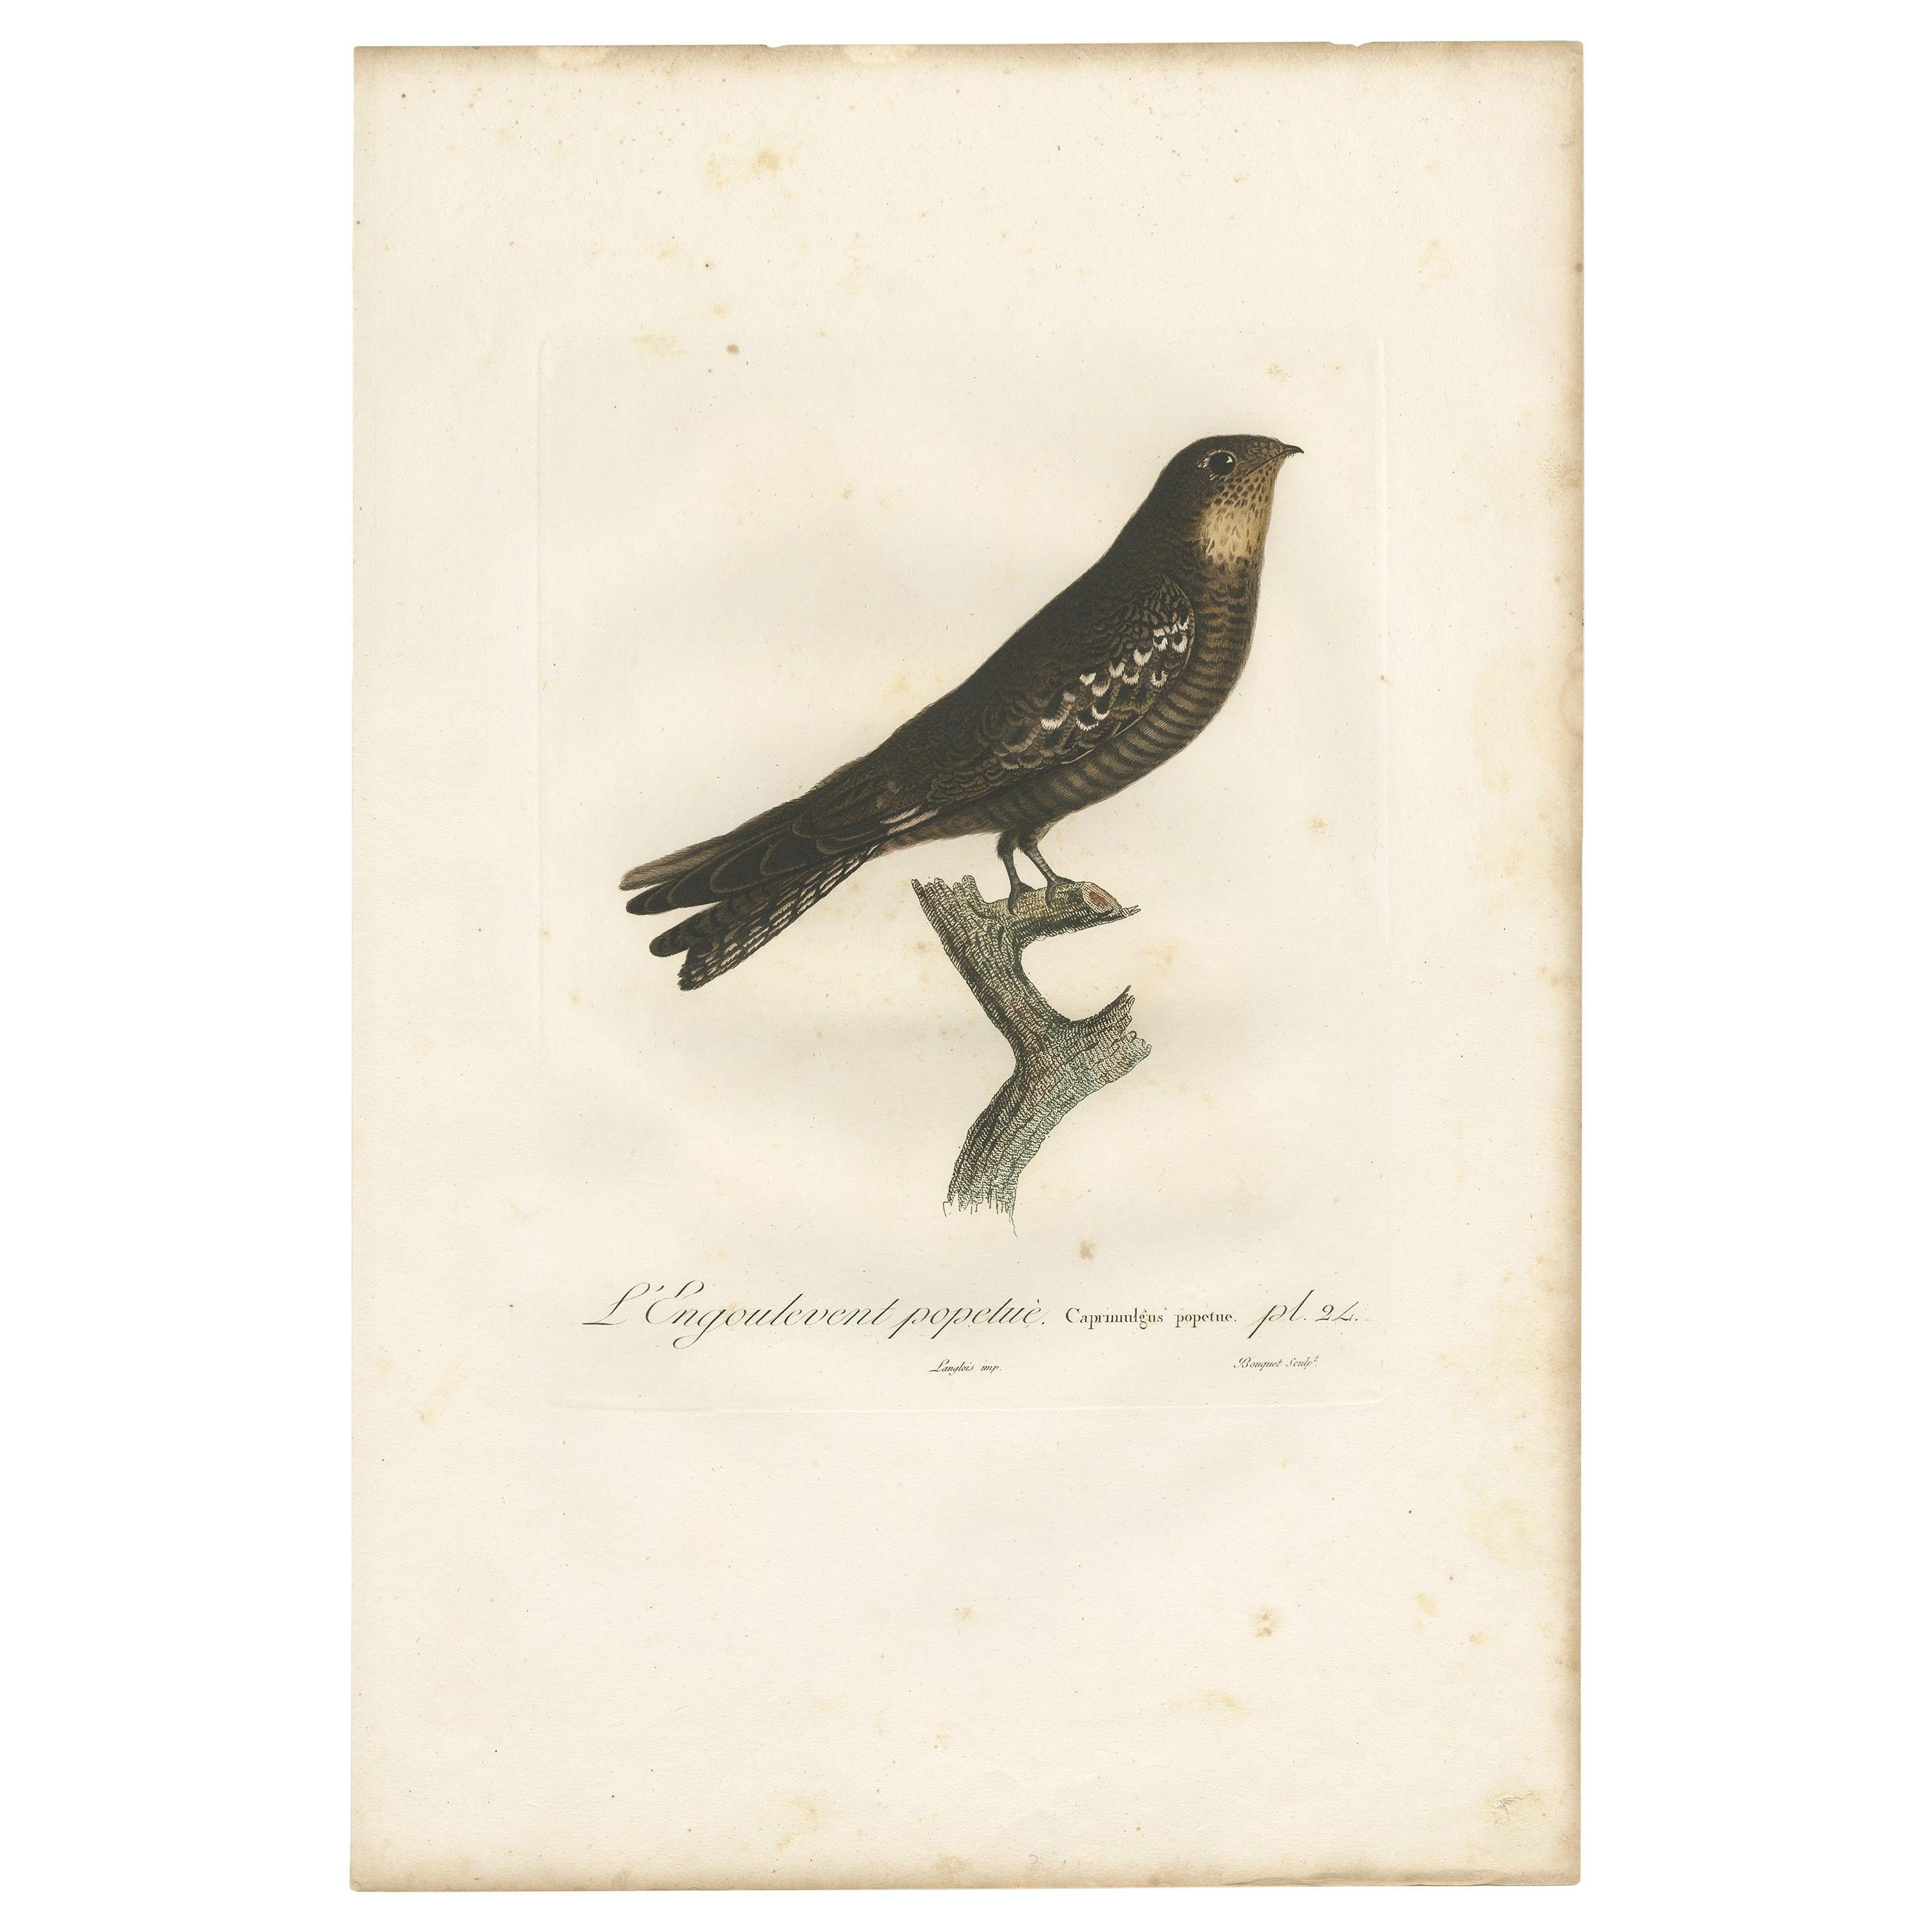 Antique Bird Print of a Nightjar by Vieillot, '1807'